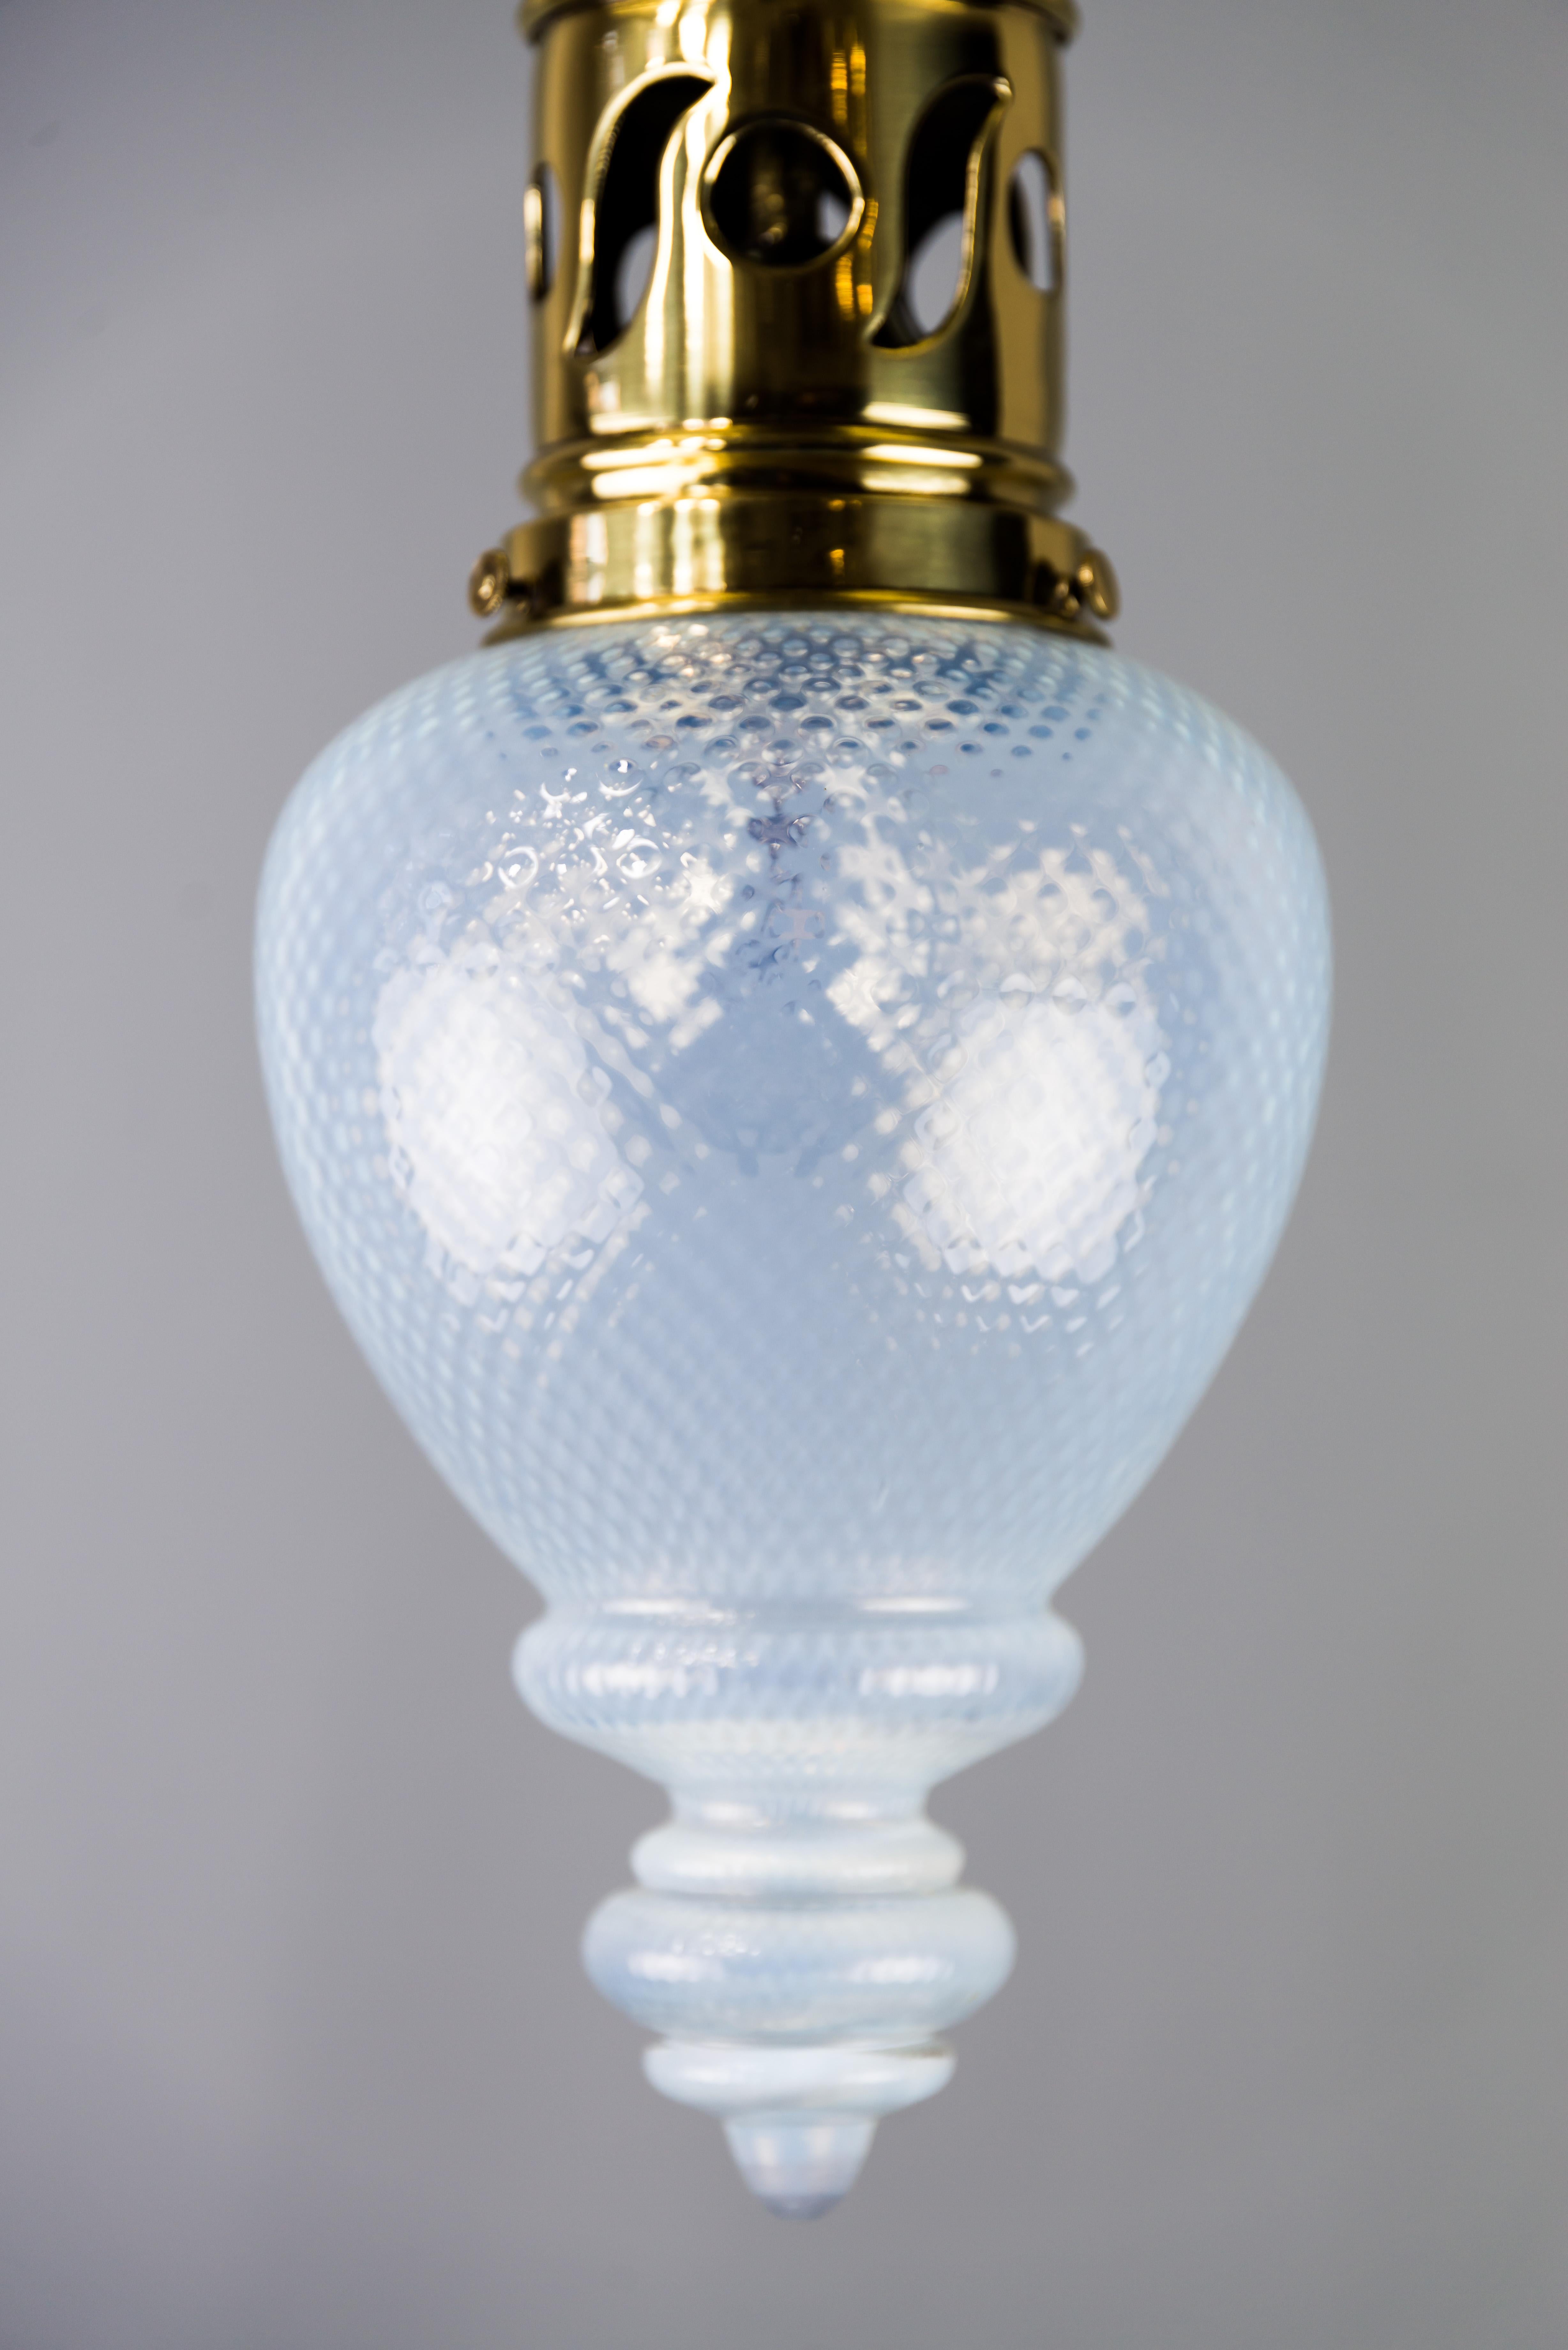 Austrian Jugendstil Ceiling Lamp circa 1908 with Original Opaline Glass Shade